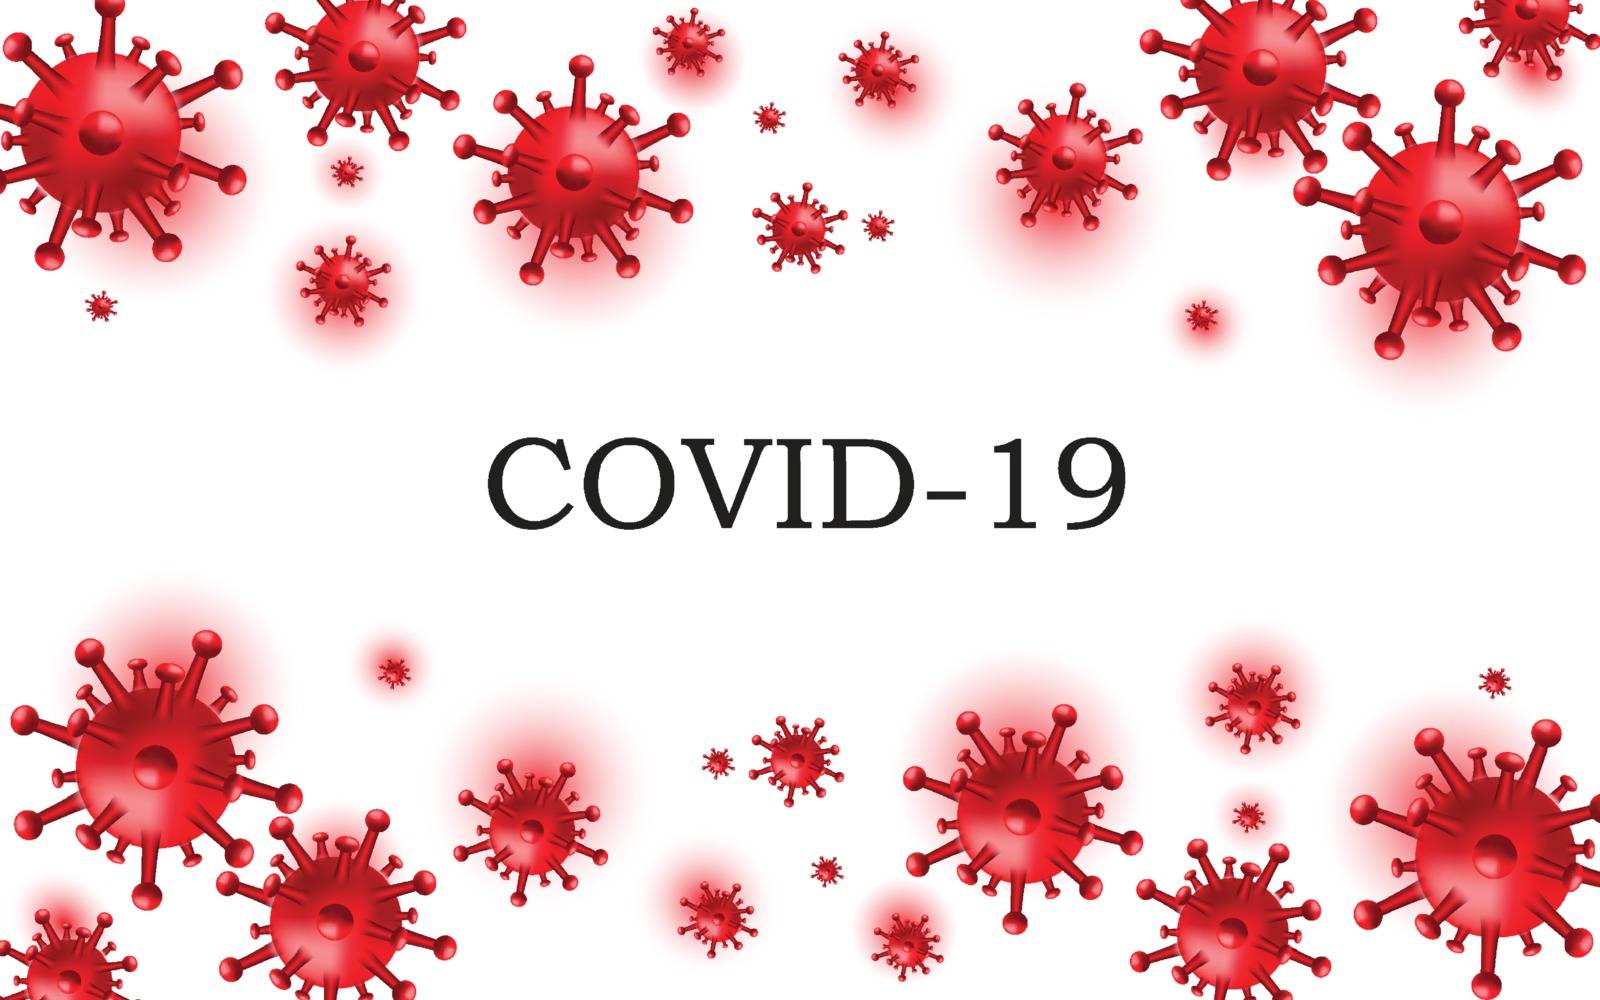 Coronavirus disease COVID-19 by monicaodo